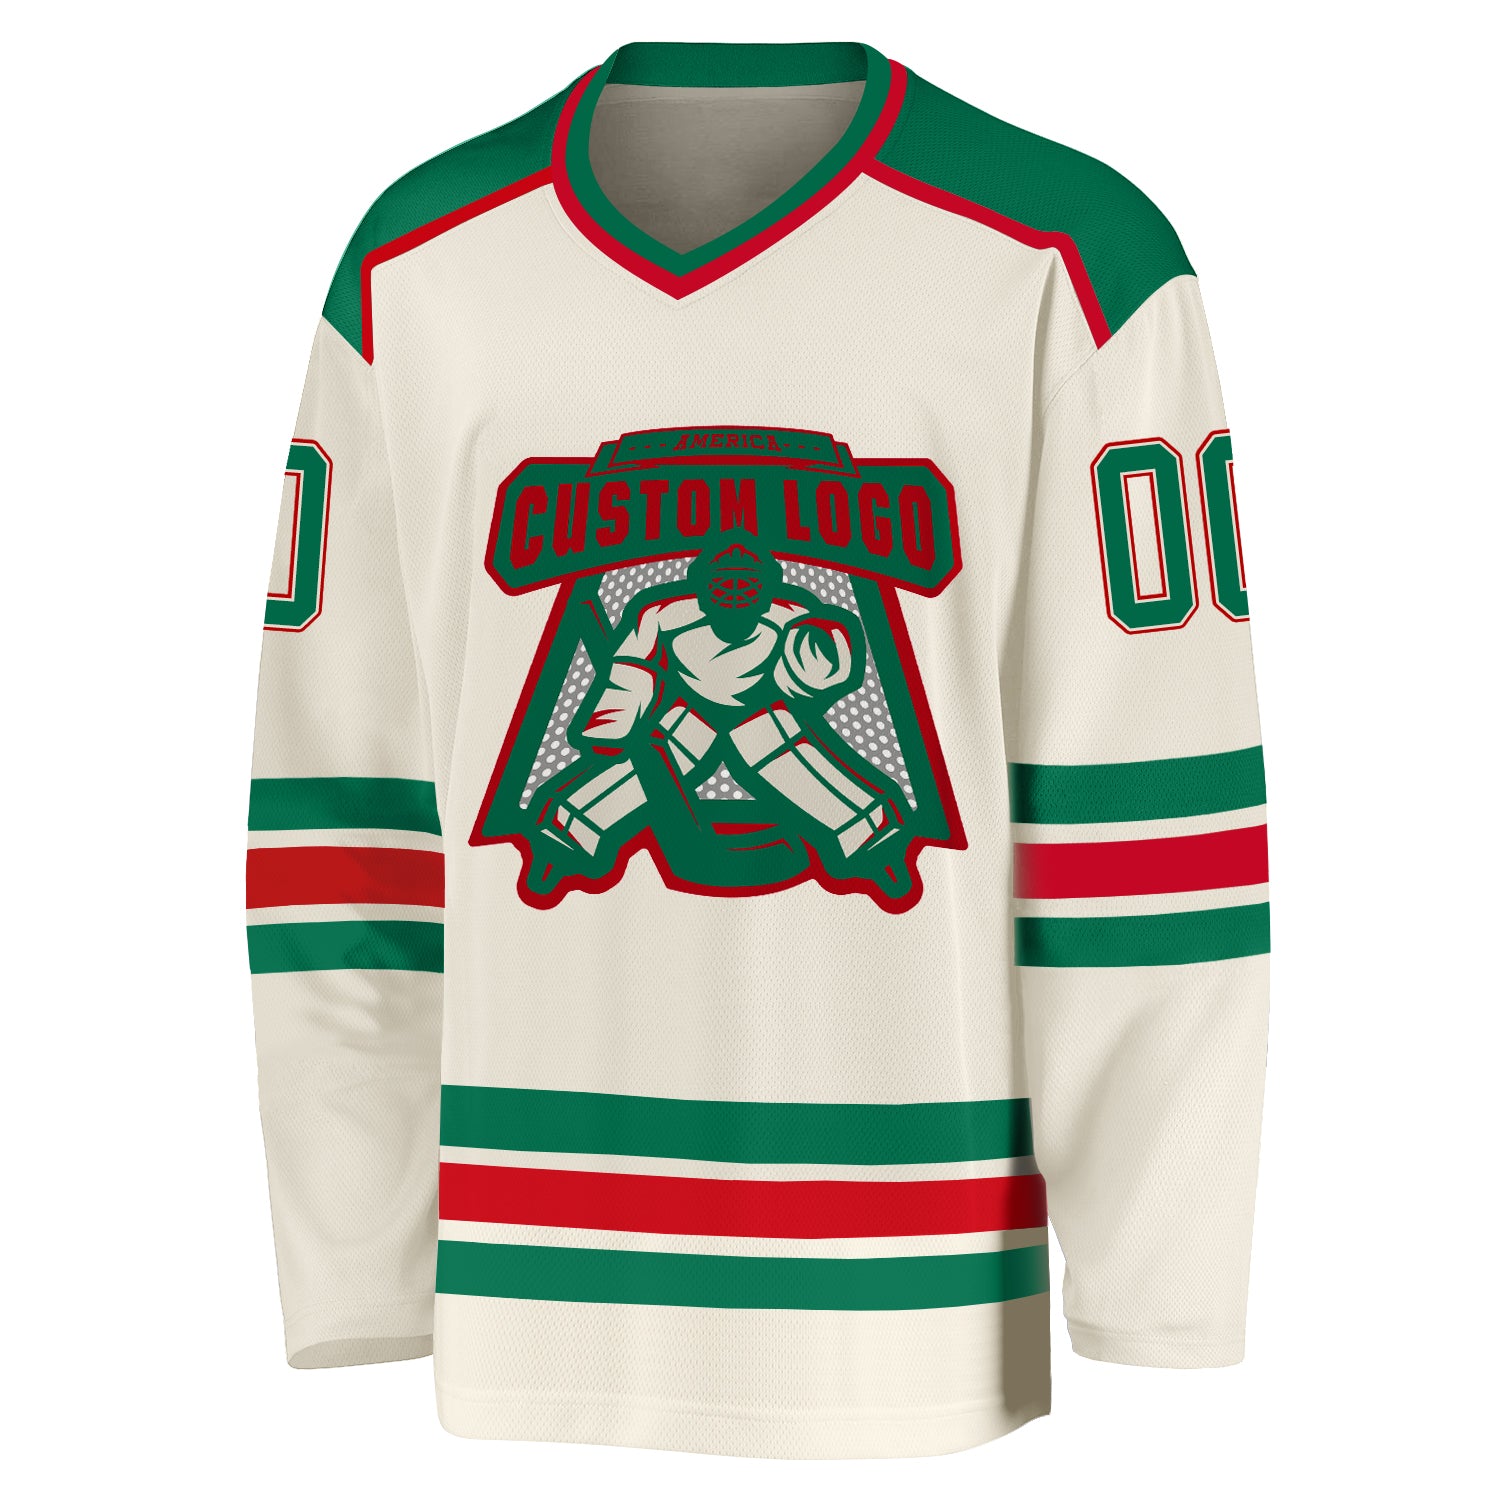 Custom Green Cream-Red Hockey Jersey Men's Size:S